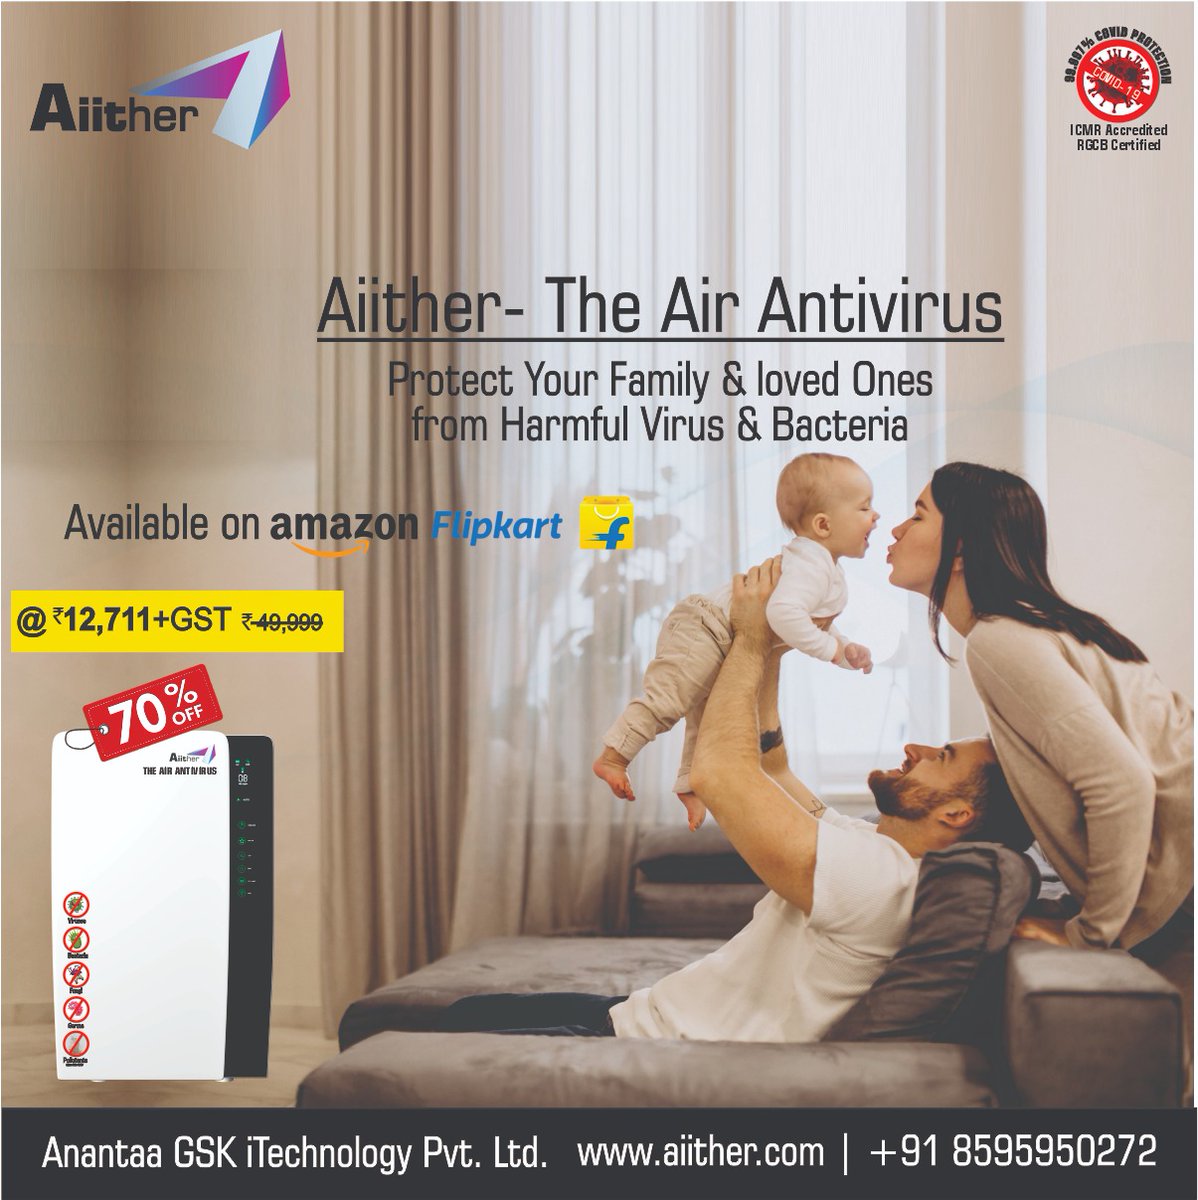 AIITHER- #Antivirus #coronavirus #virus #health #viruse #antivirus #airpurifier #purifiers #airpurifiers #air #bacteria #extraearning